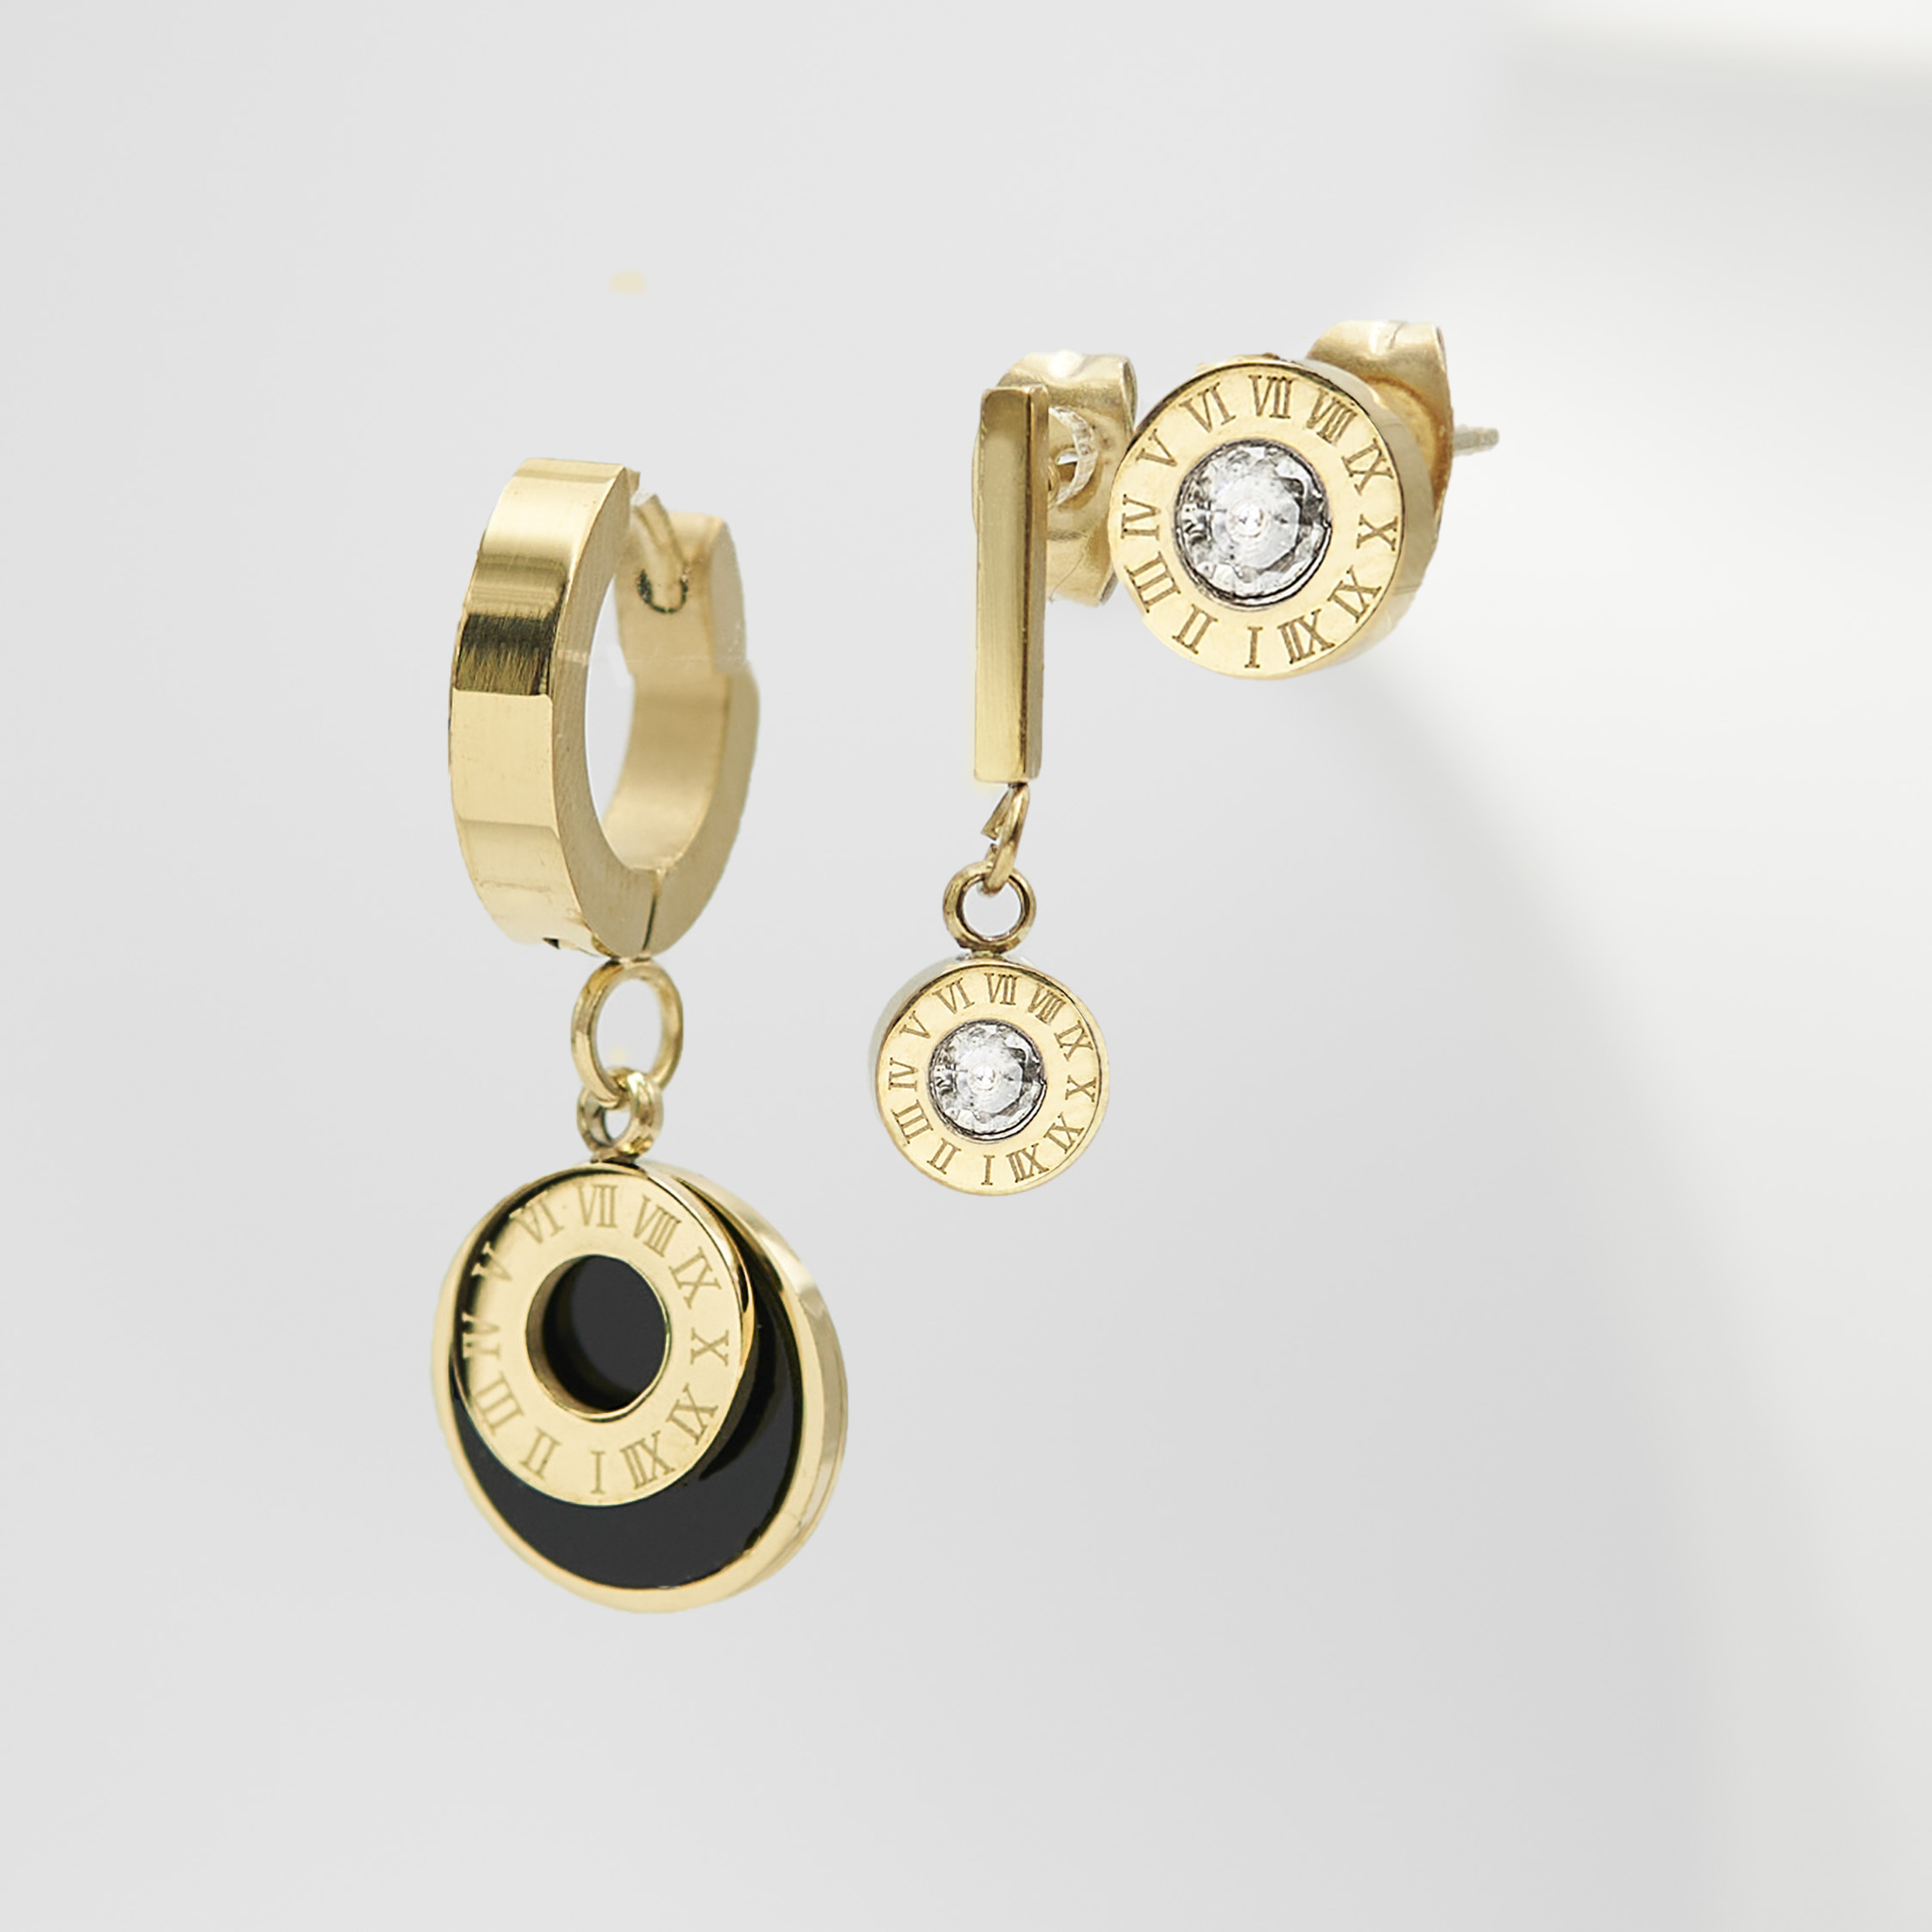 2- Era Elegance Diamonds Gold Edition -Örhänge Set 316 L - Special Earrings from SWEVALI